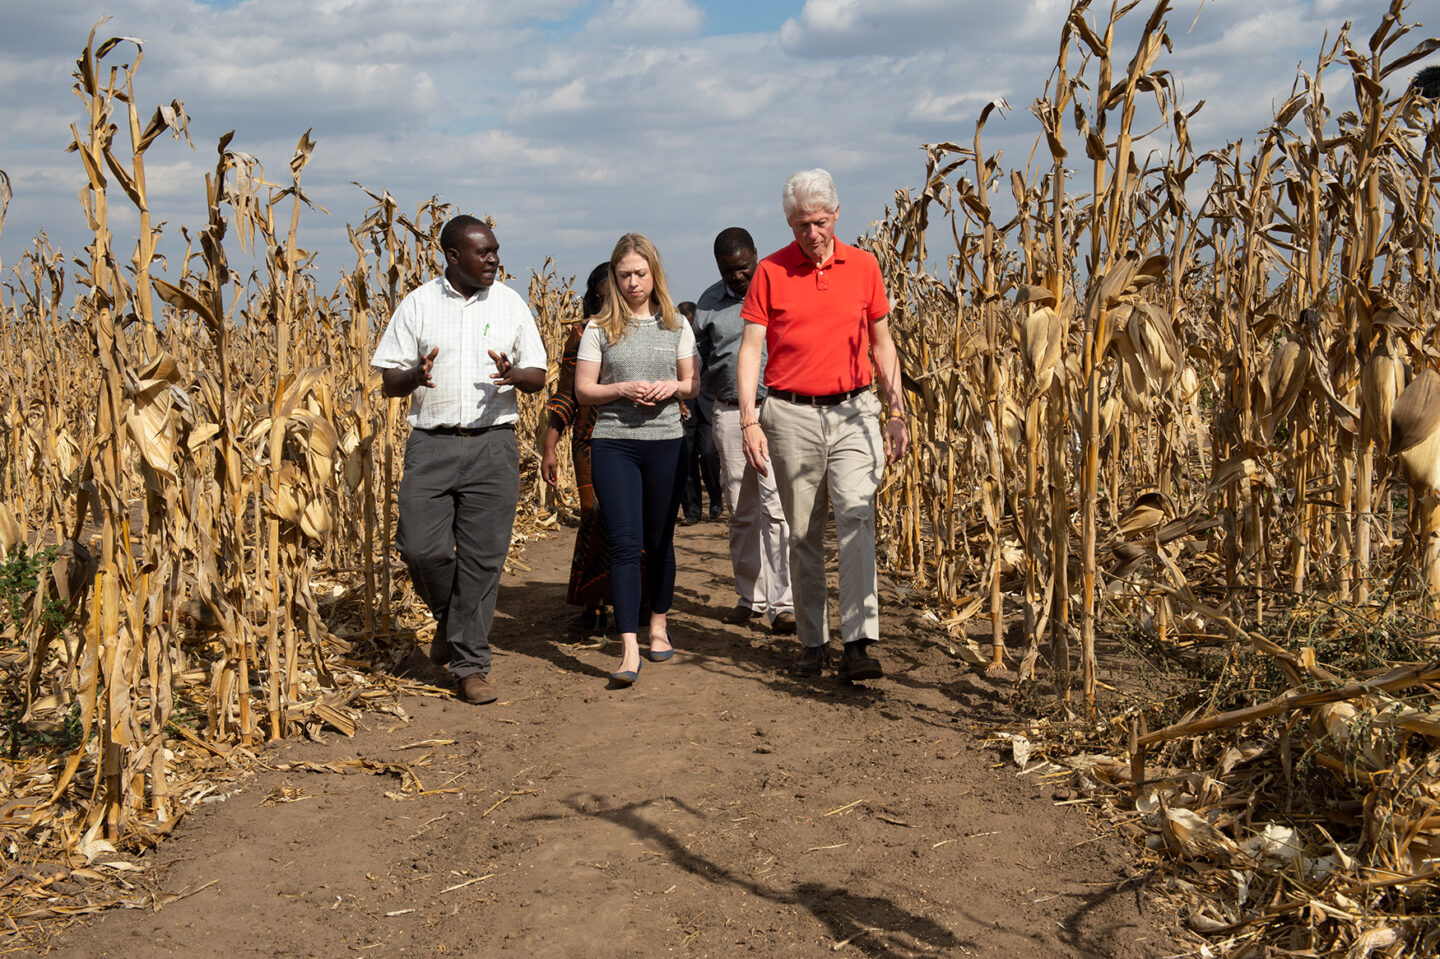 President Clinton and Chelsea Clinton walk around a farm in Malawi